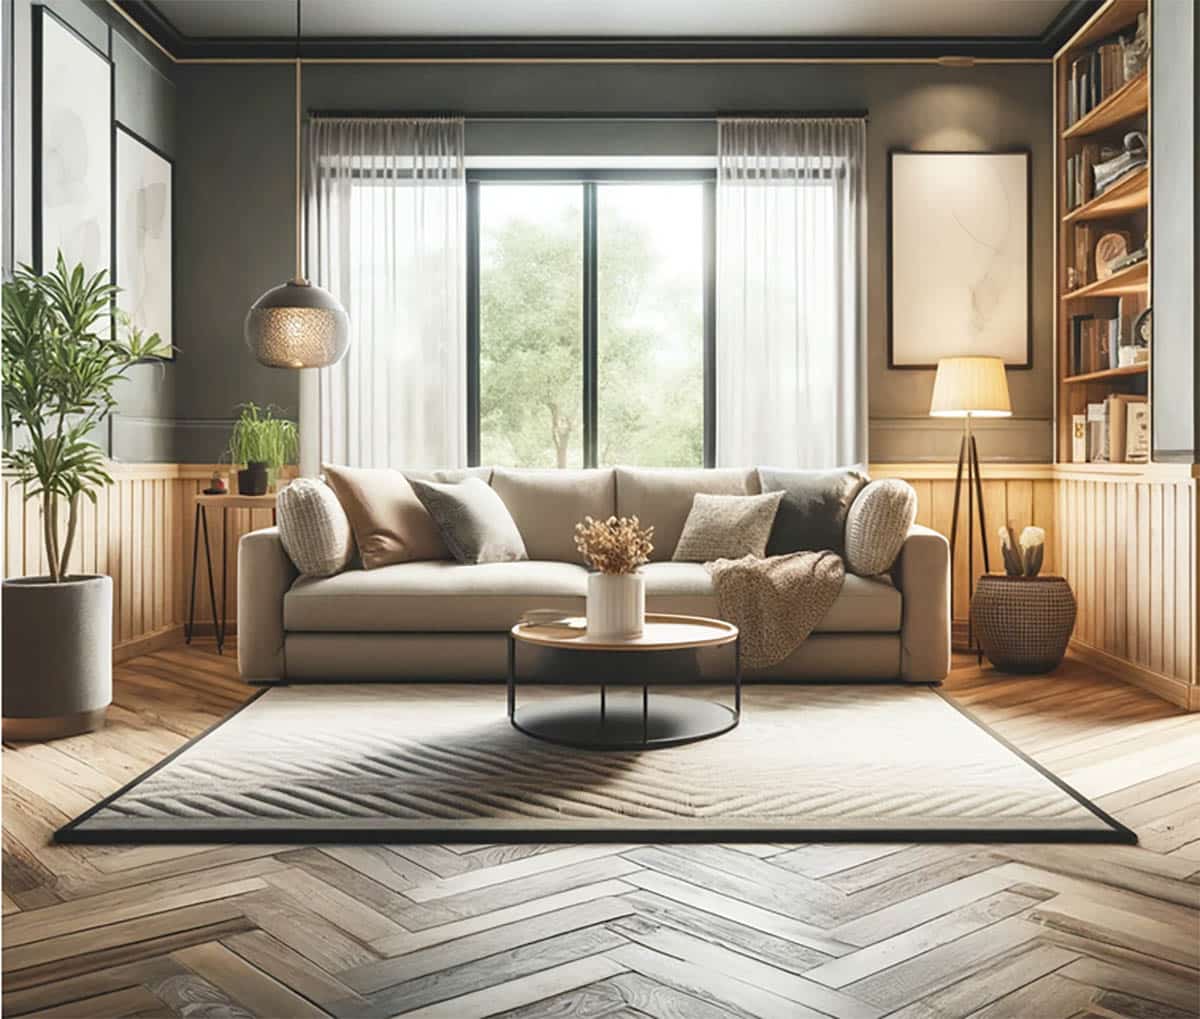 Hardwood plank flooring in modern living room